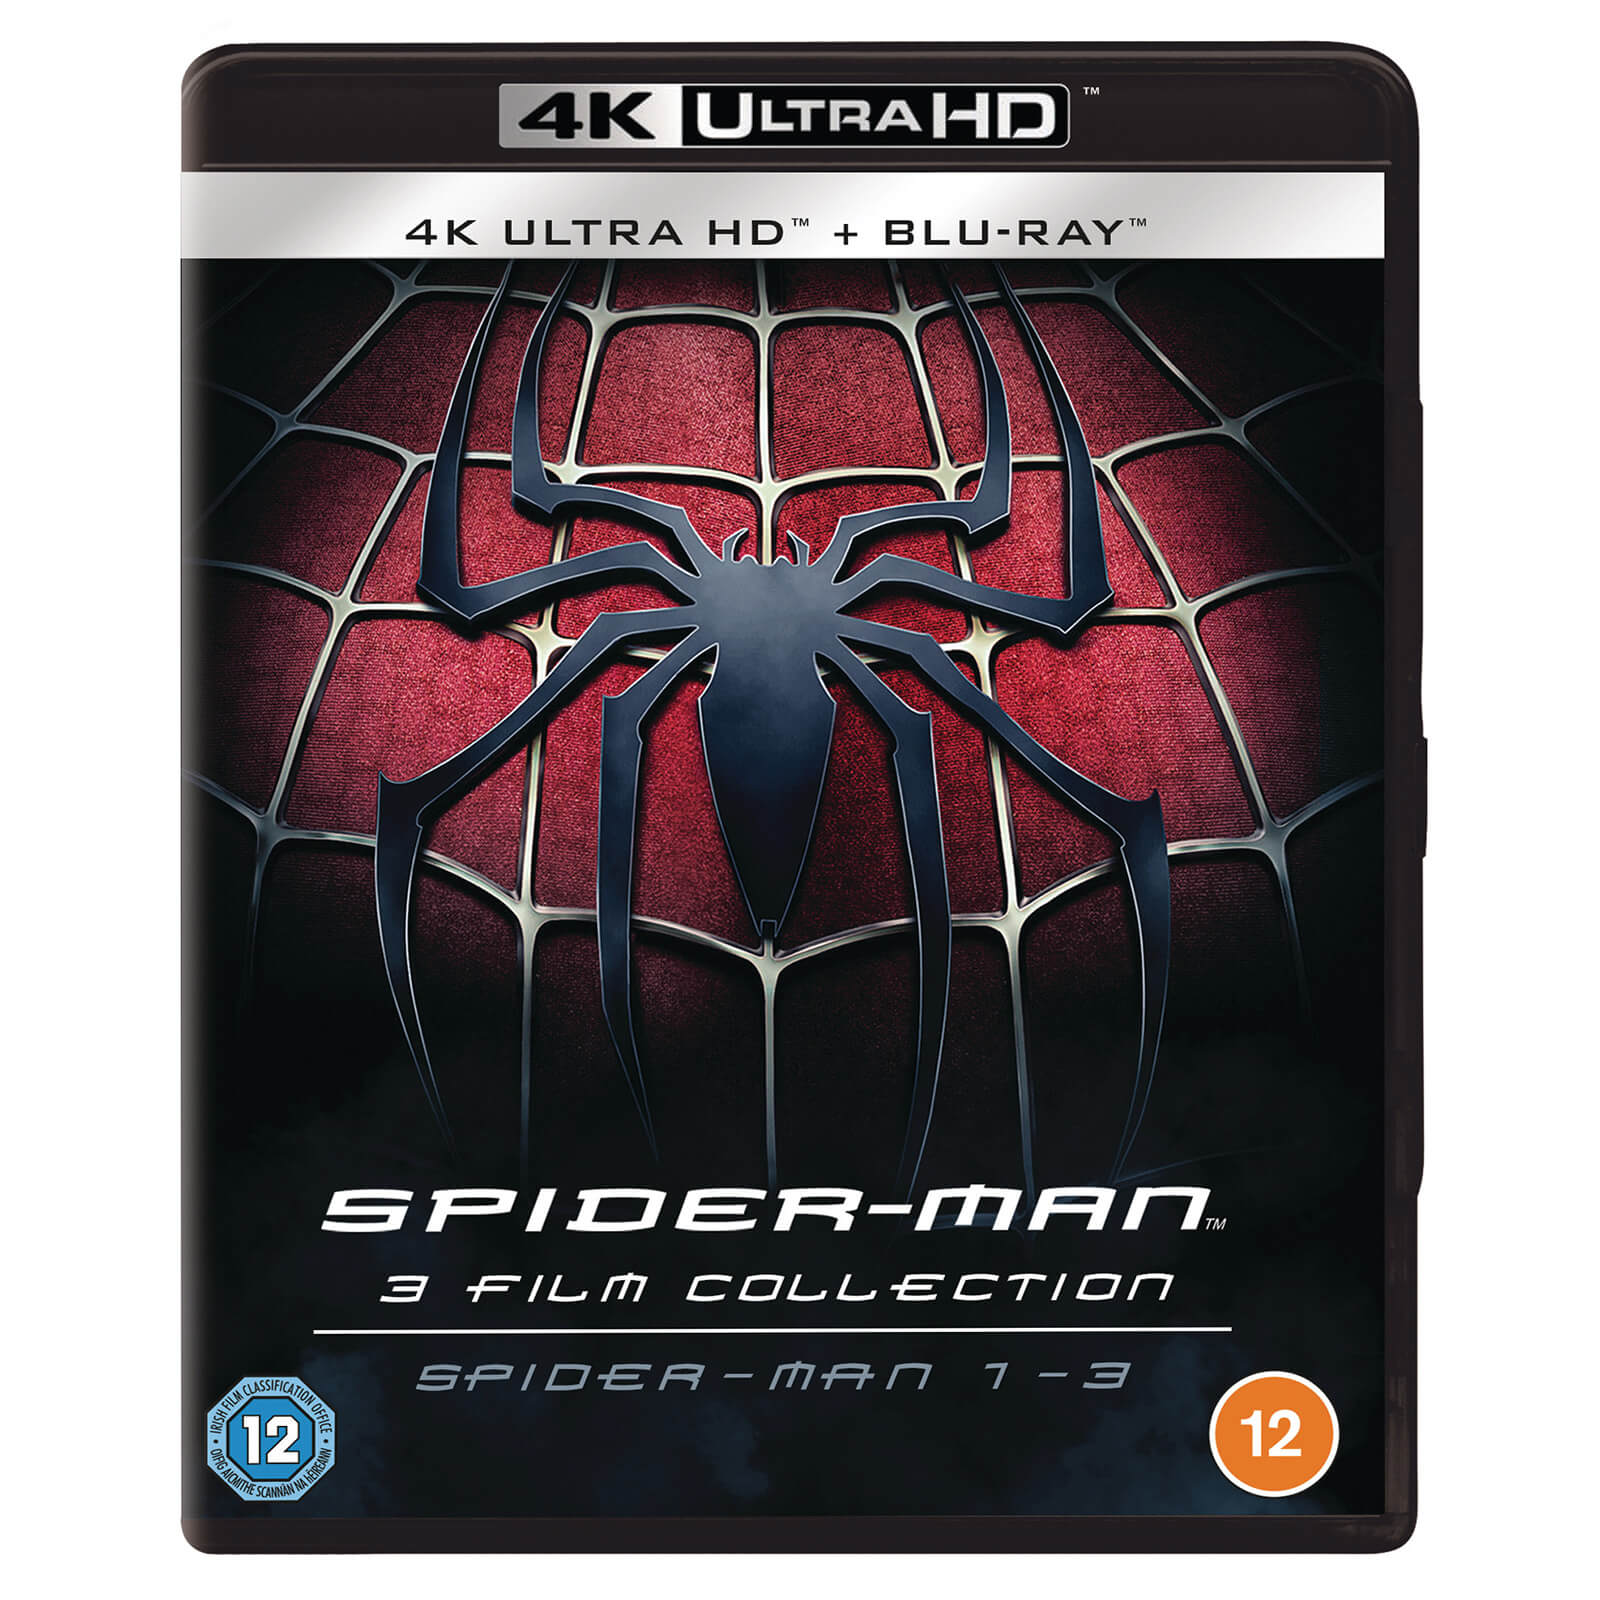 Spider-Man 1-3 - 4K Ultra HD (Blu-ray inclus)